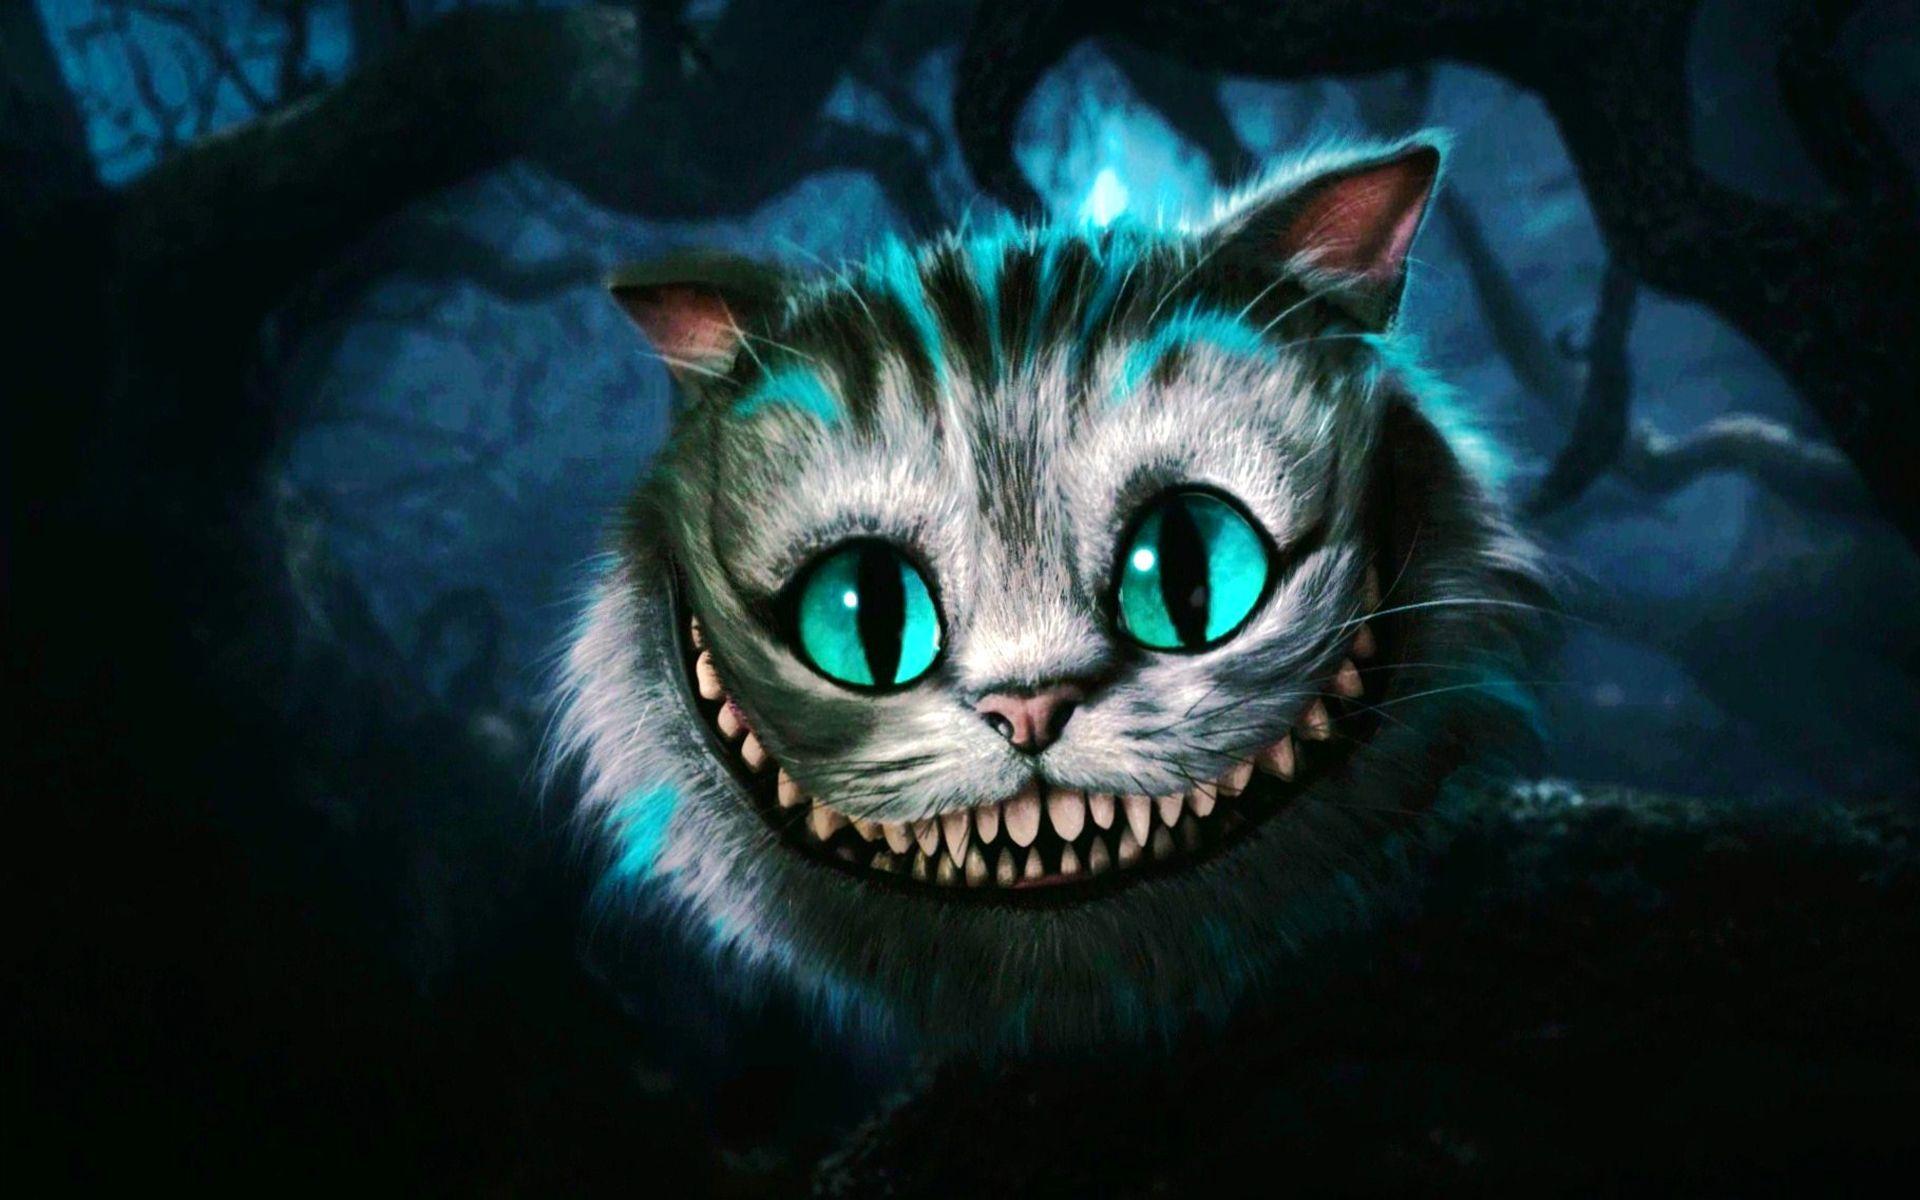 Alice in Wonderland Cheshire Cat Wallpapers - Top Free Alice in Wonderland Cheshire Cat